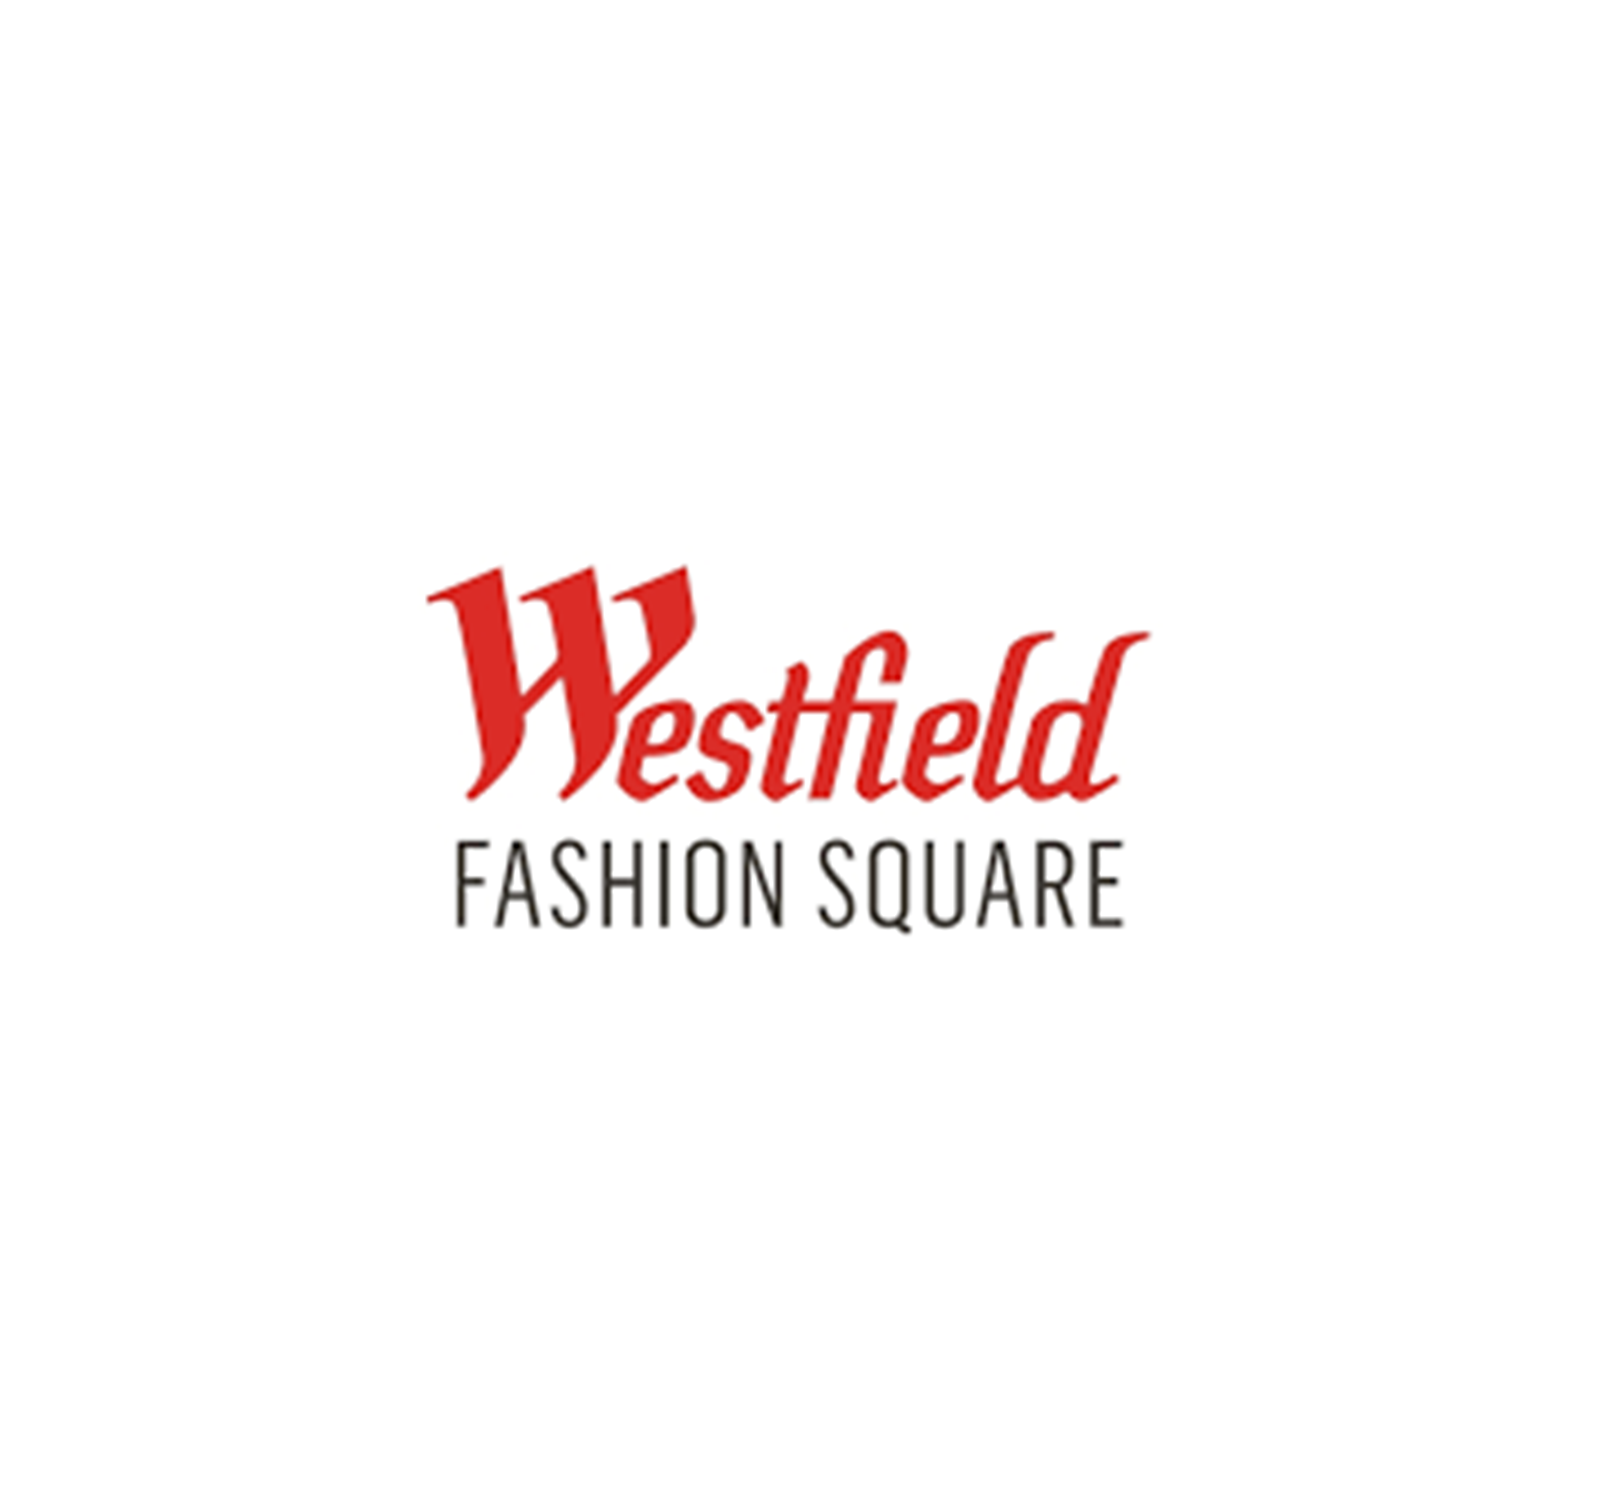 Westfield Fashion Square logo - white.png